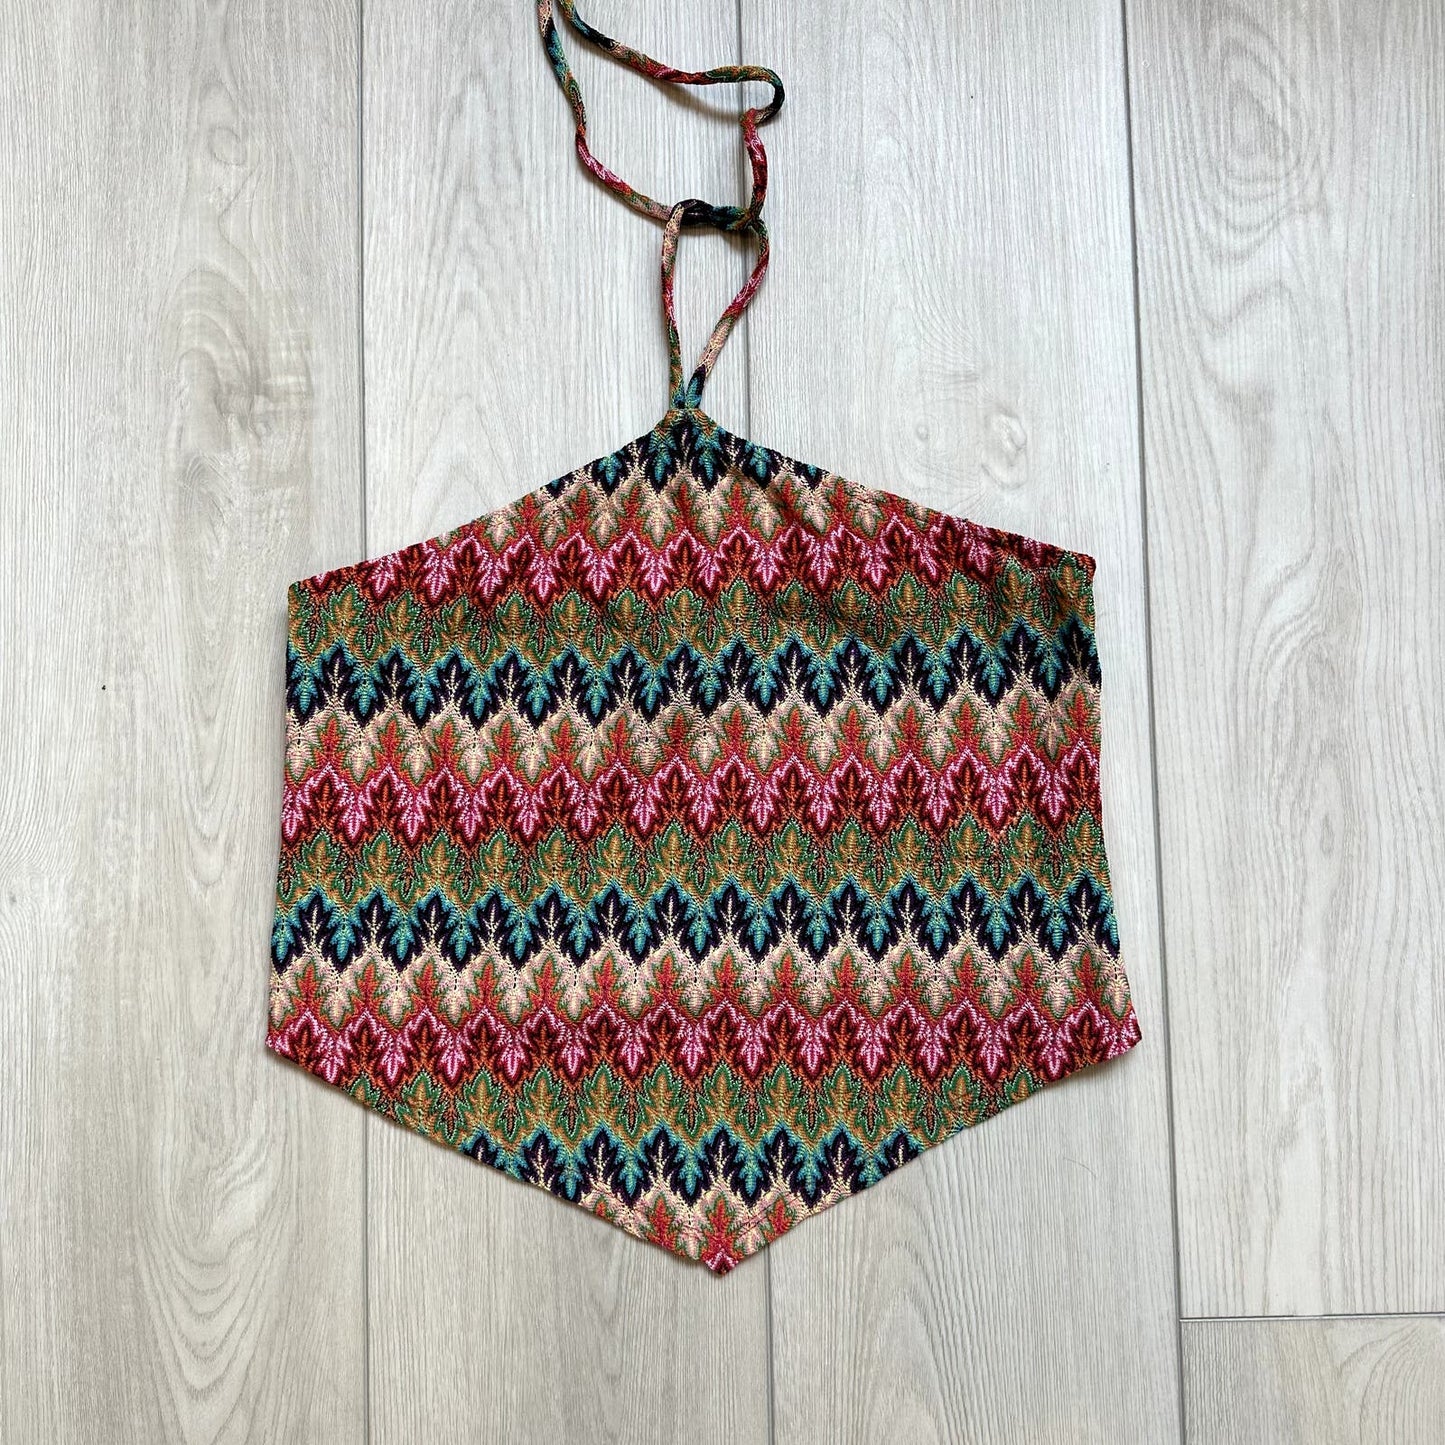 Urban Outfitters Harmonie handkerchief halter 70s inspired knit tank top